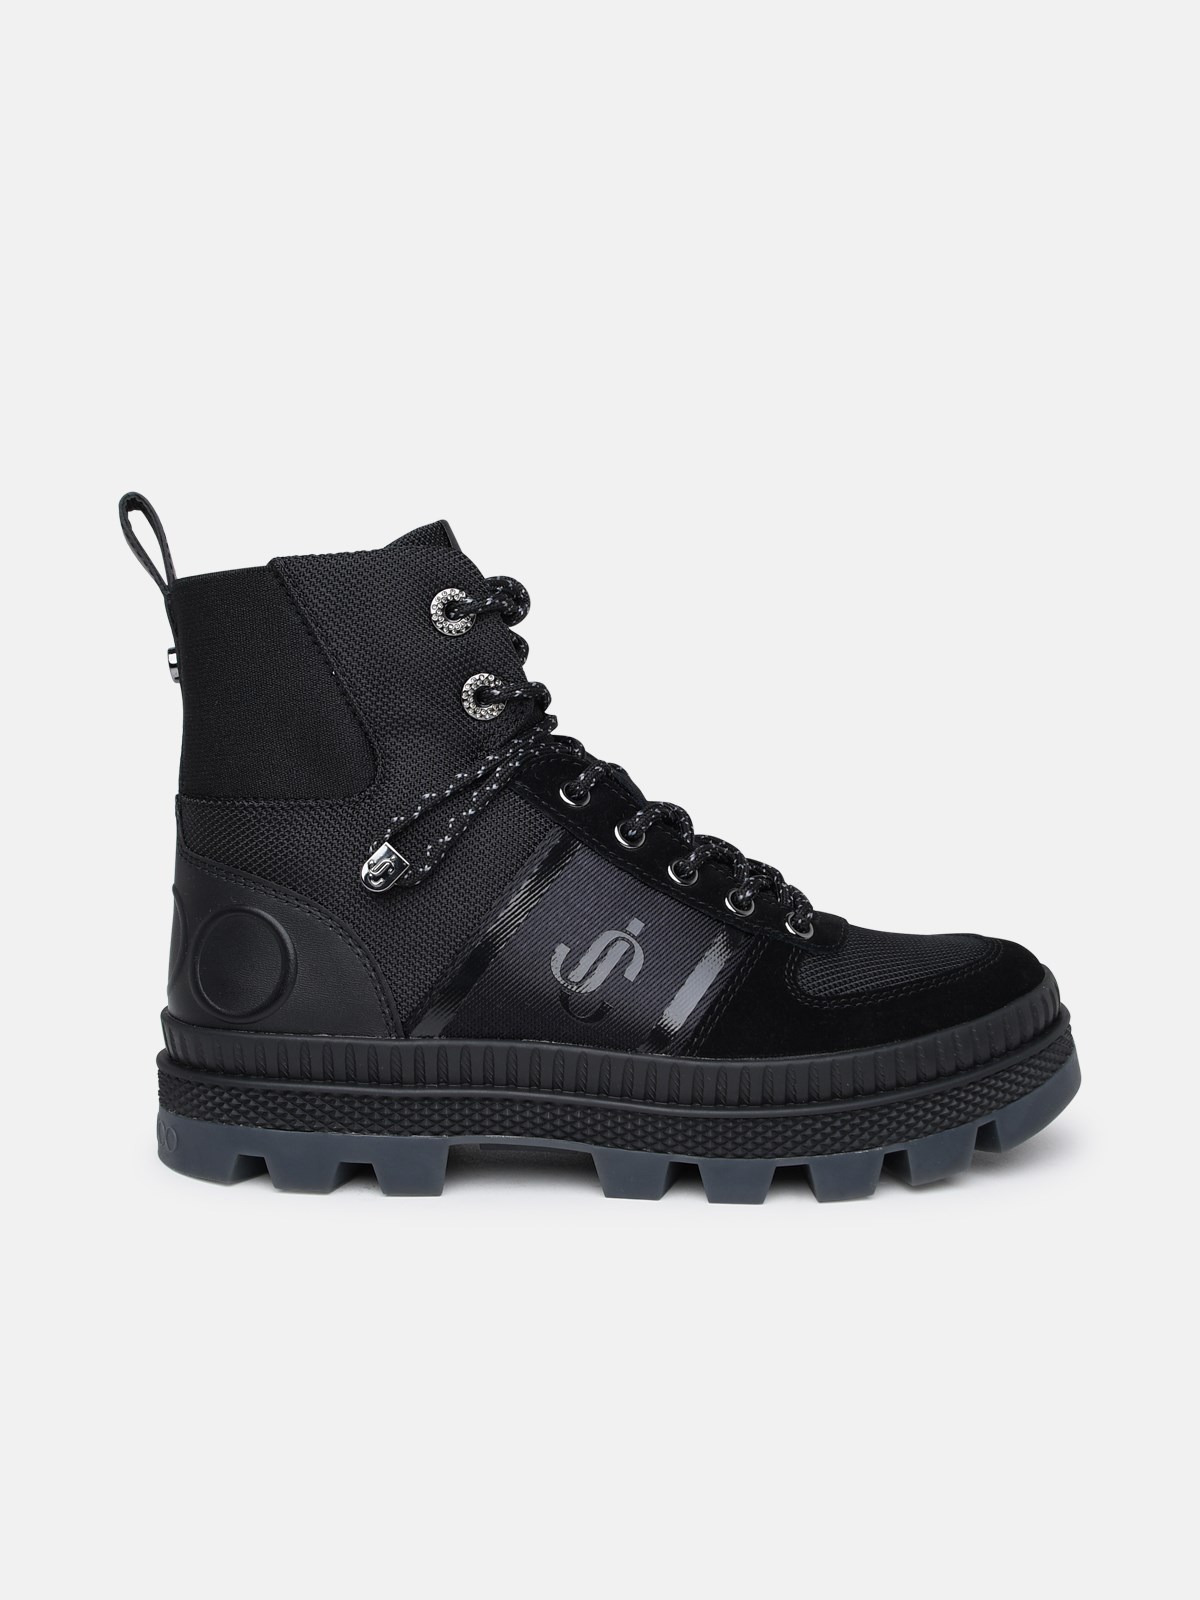 Jimmy Choo Black Leather Blend Boot